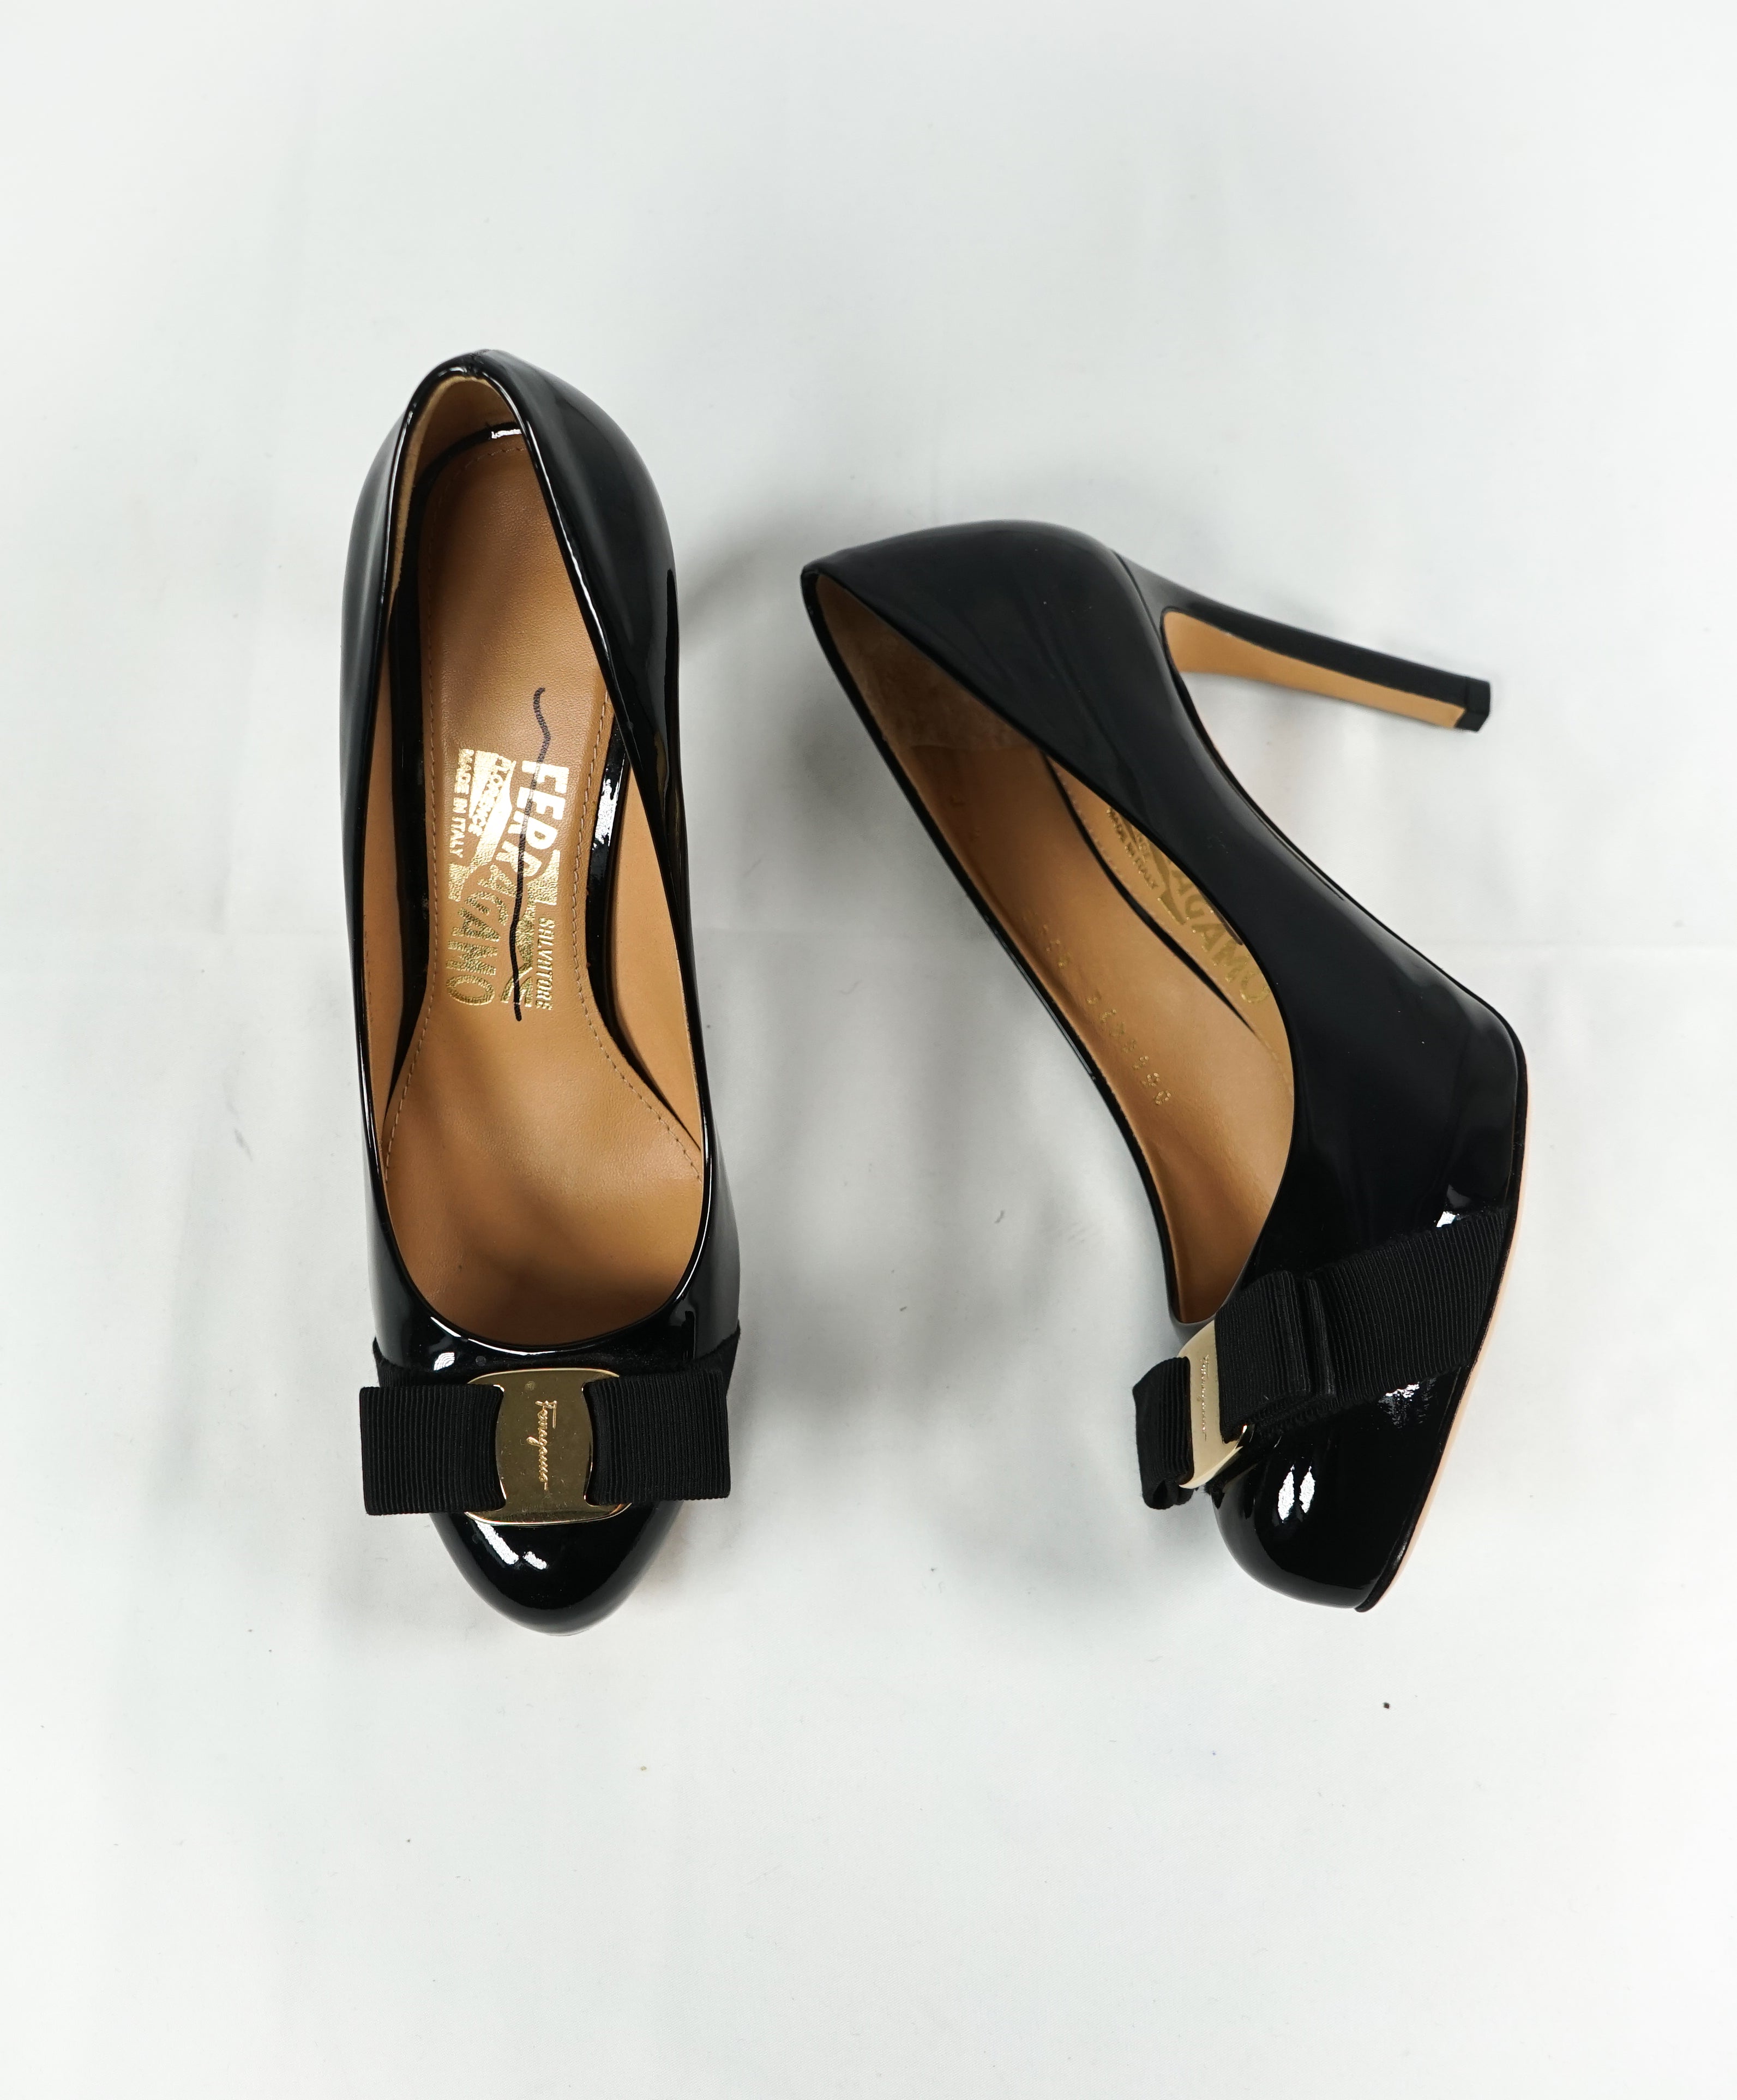 leather pump heels